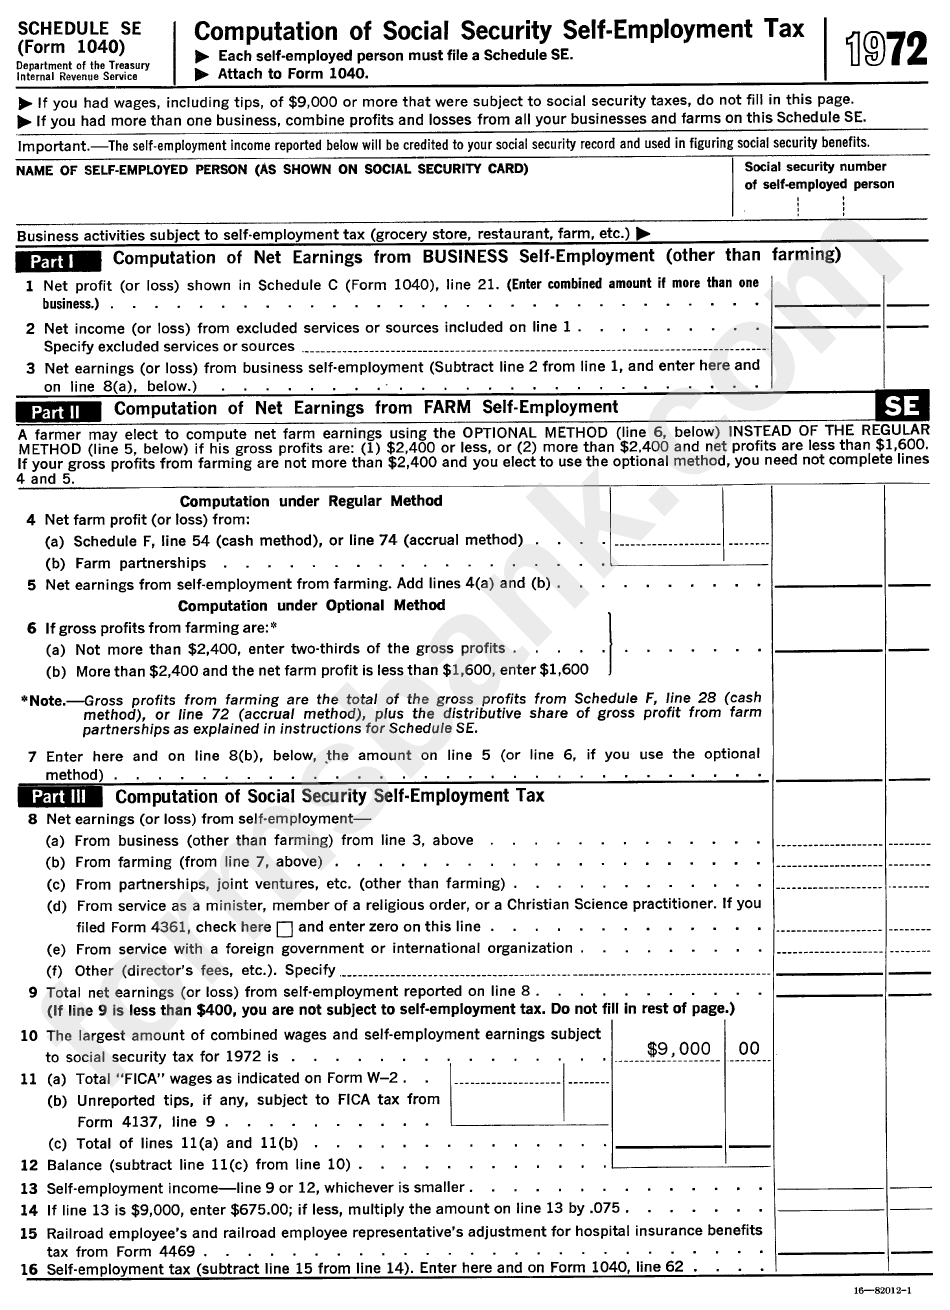 schedule-se-form-1040-computation-of-social-security-self